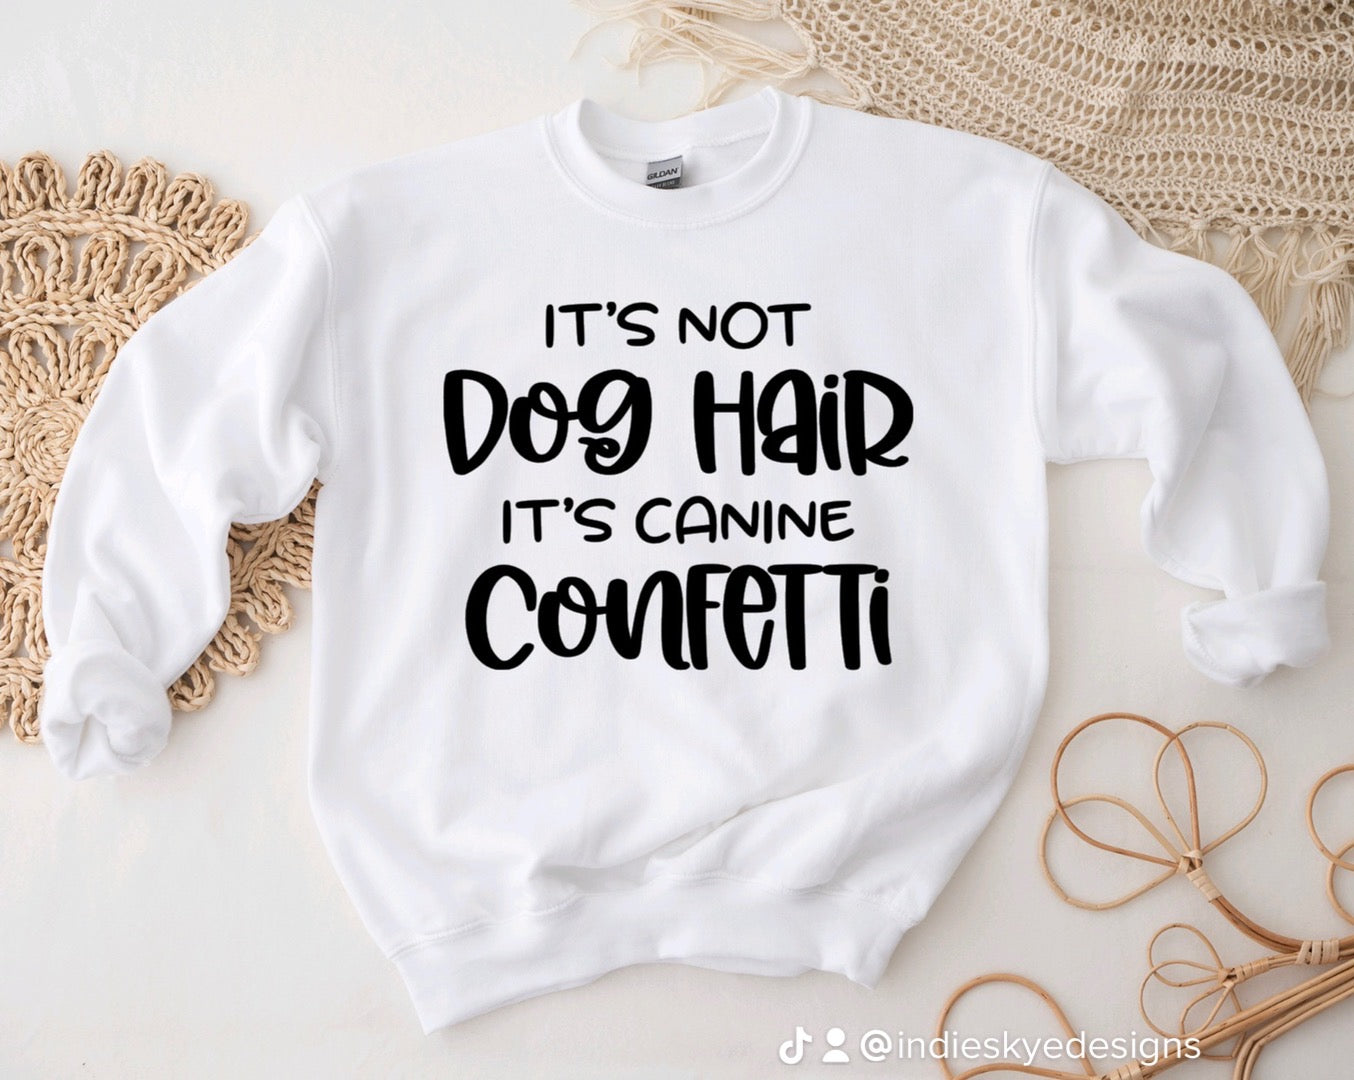 Canine confetti sweatshirt